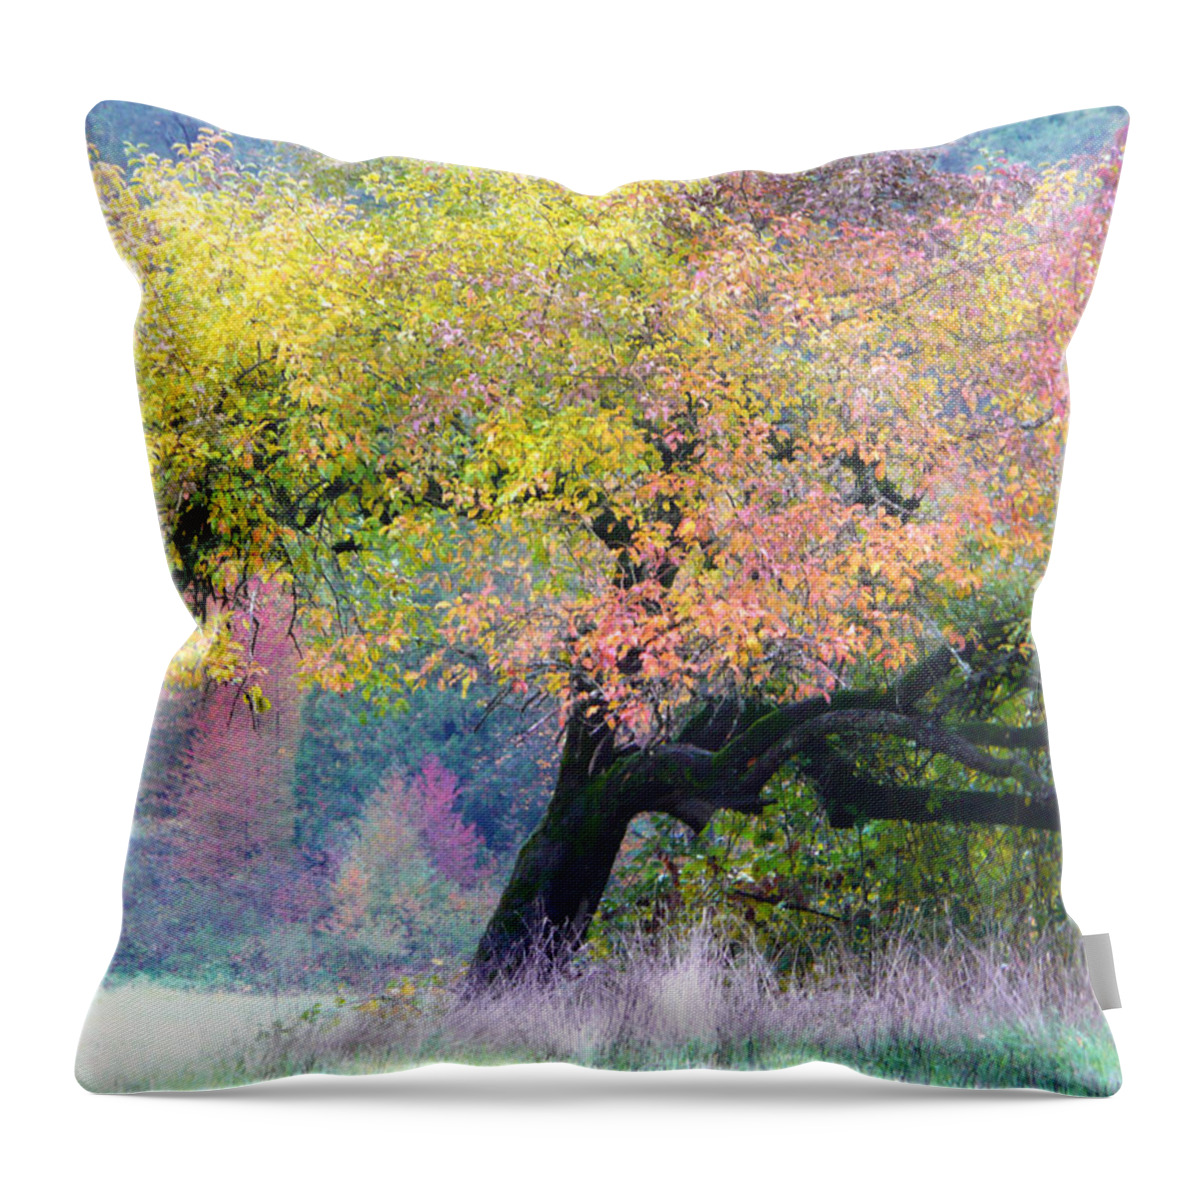 Tree Throw Pillow featuring the photograph Autumn Tree by Lori Seaman